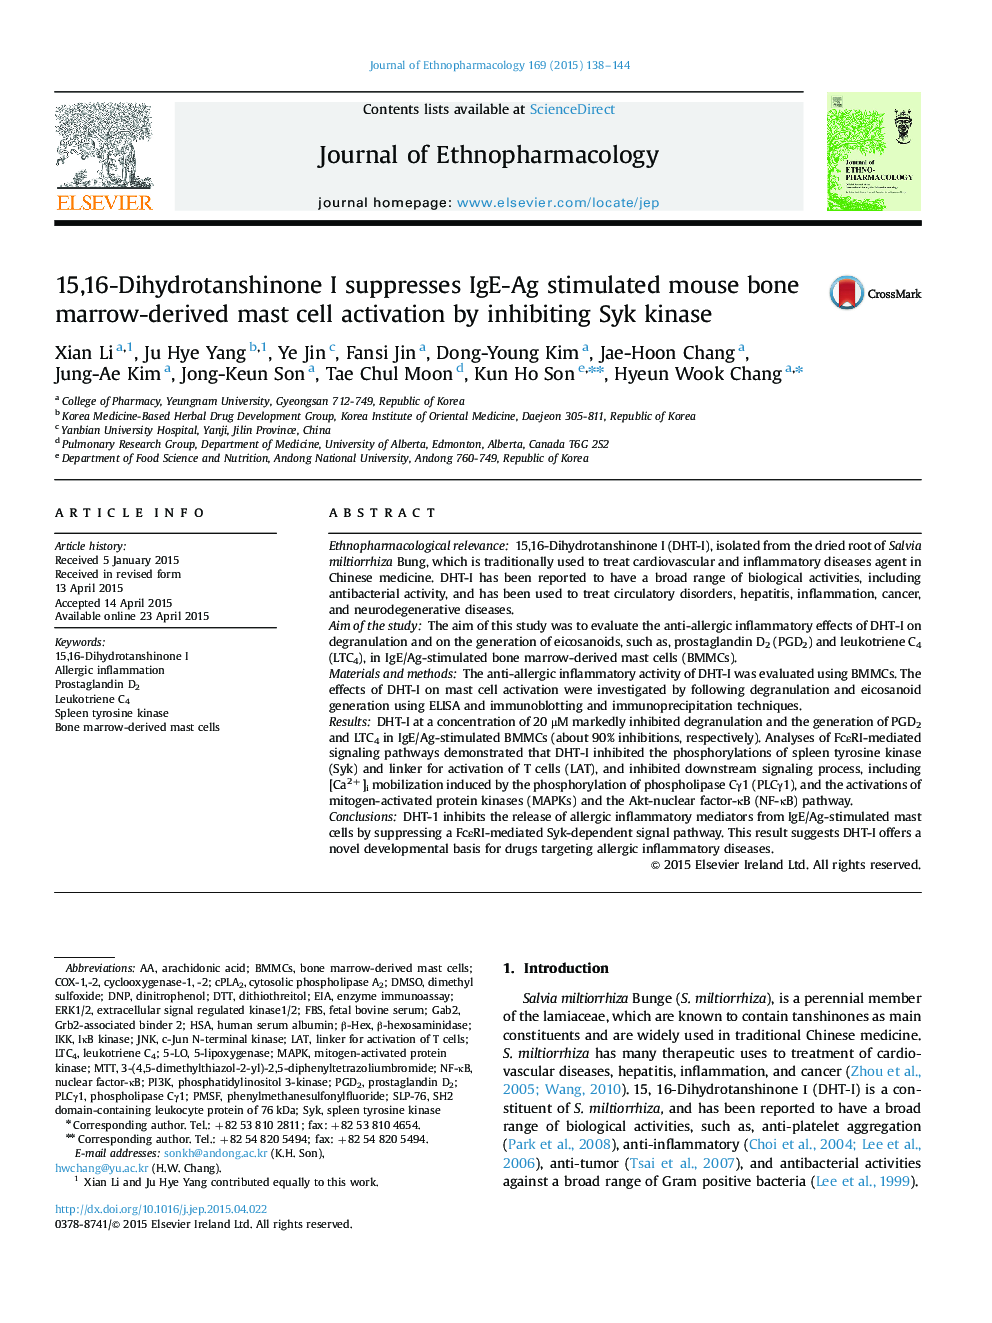 15,16-Dihydrotanshinone I suppresses IgE-Ag stimulated mouse bone marrow-derived mast cell activation by inhibiting Syk kinase